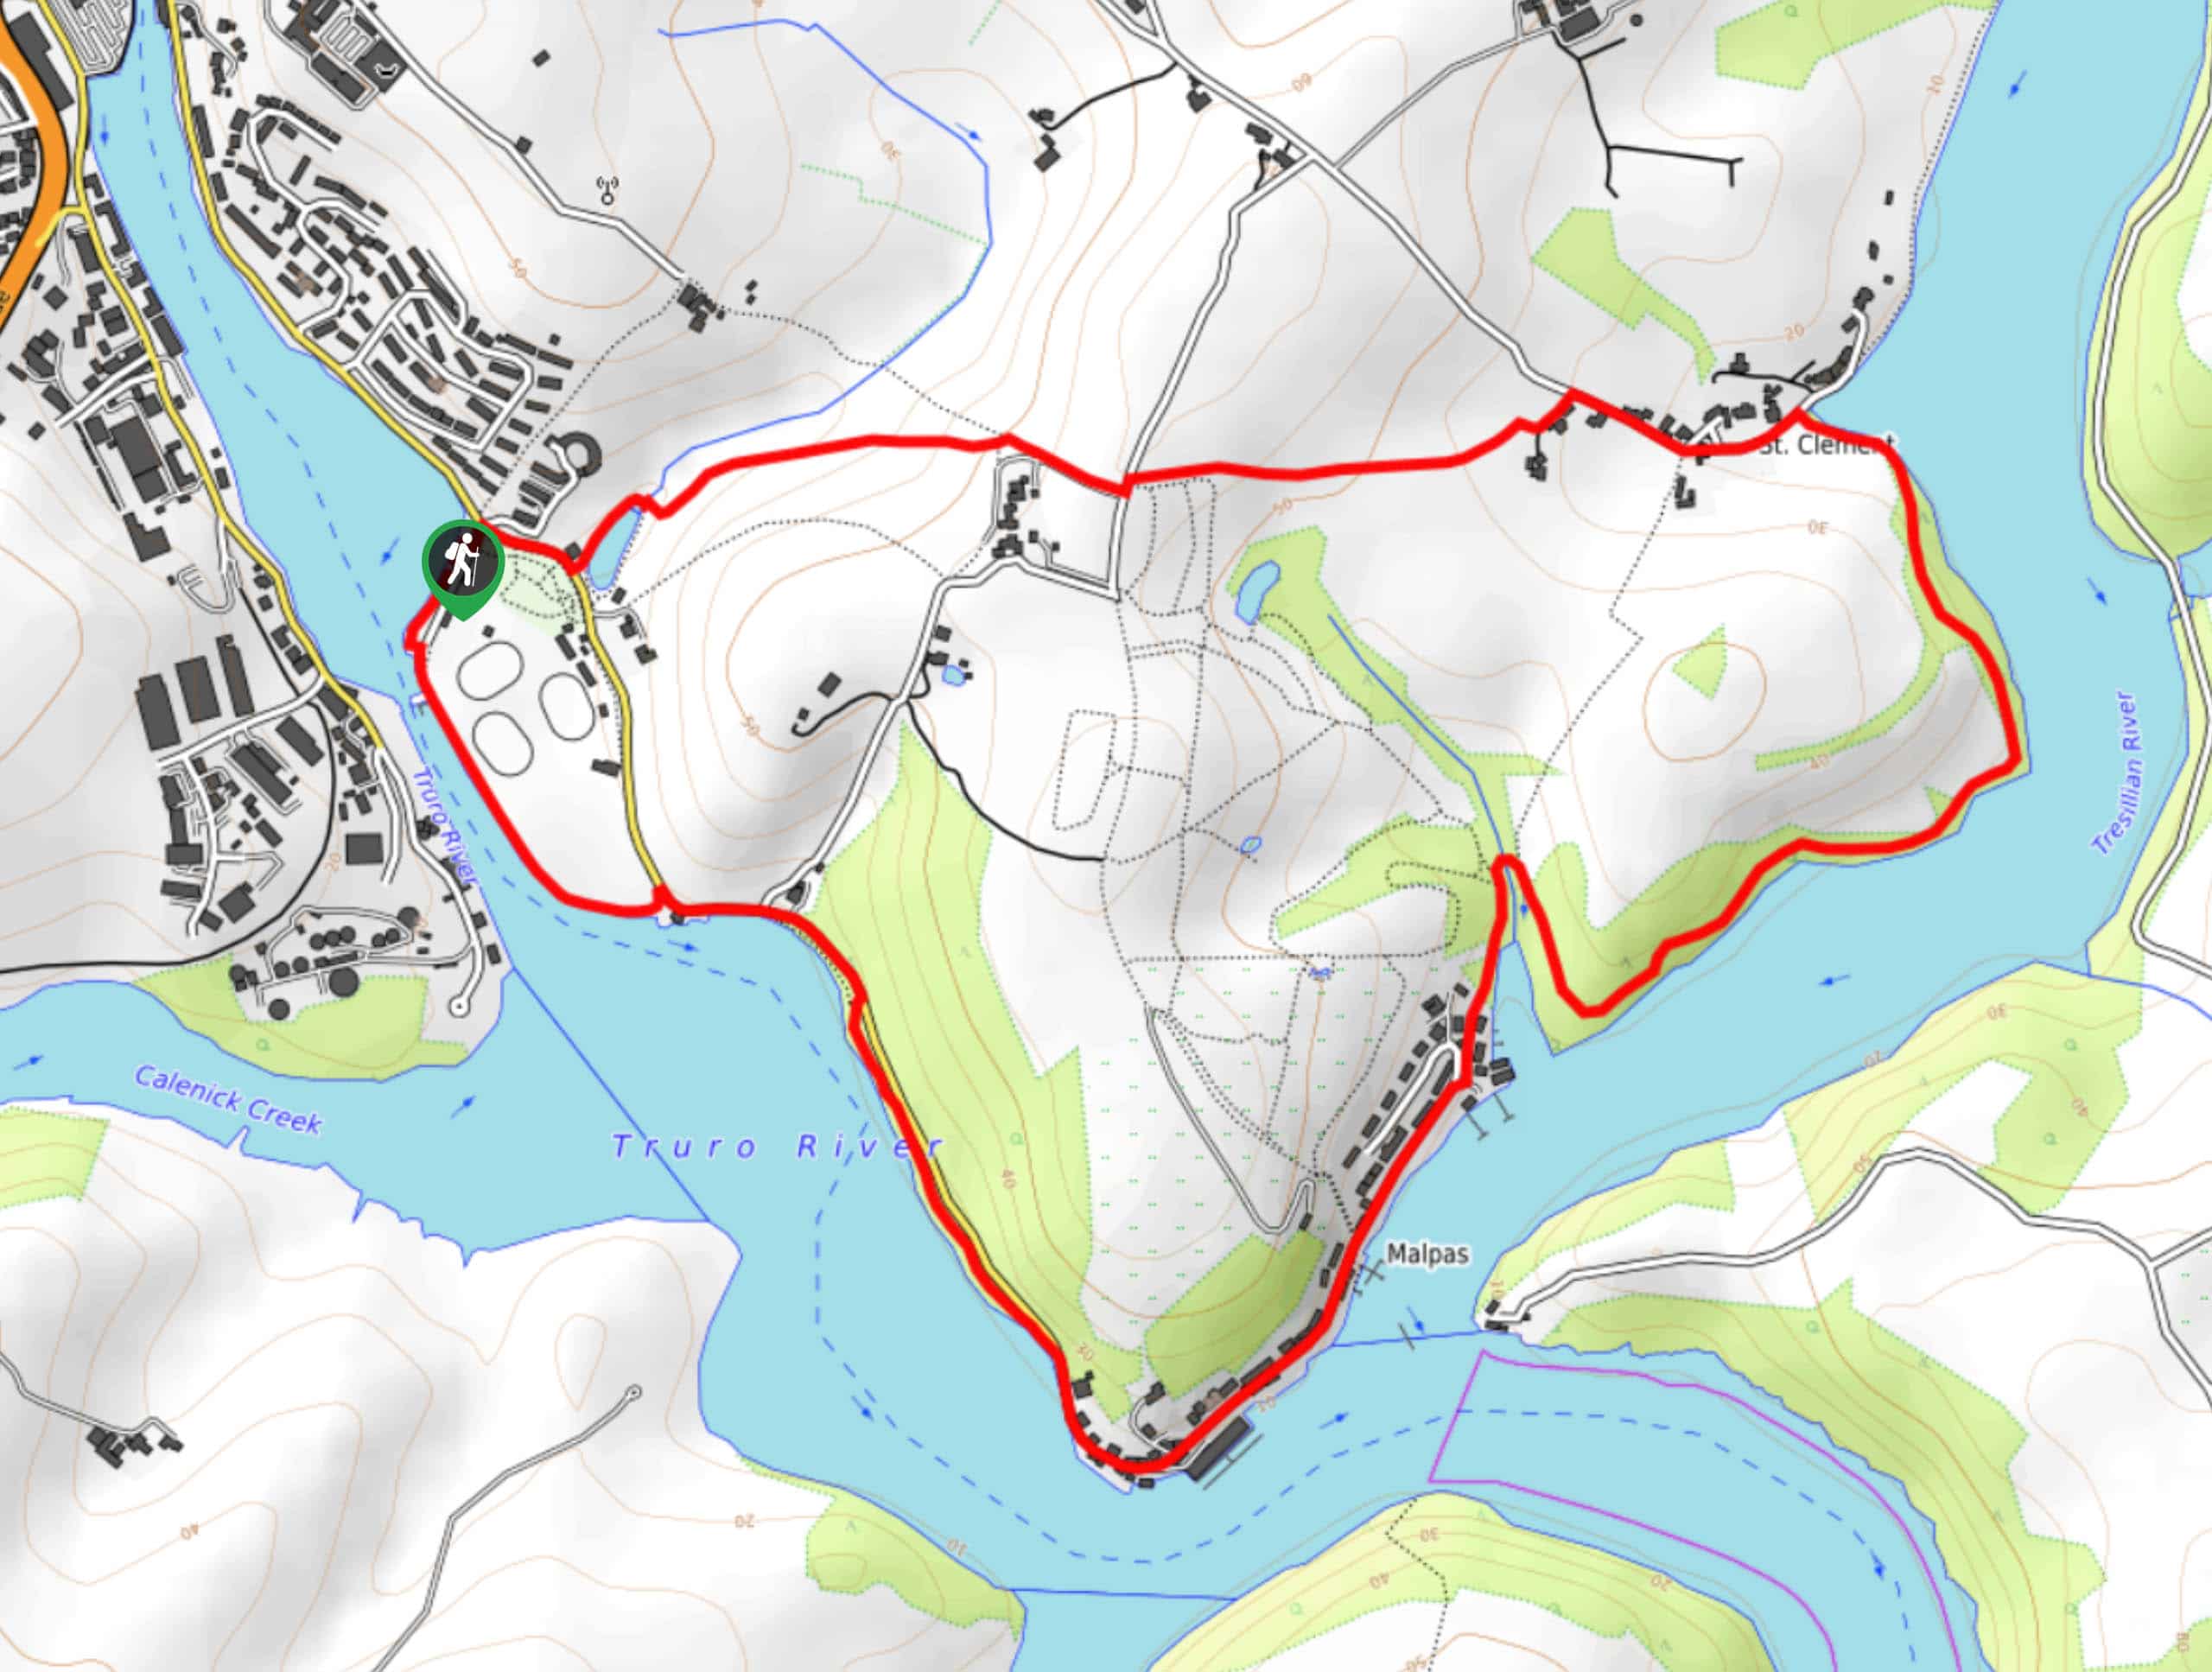 St Clement and Malpas Walk Map